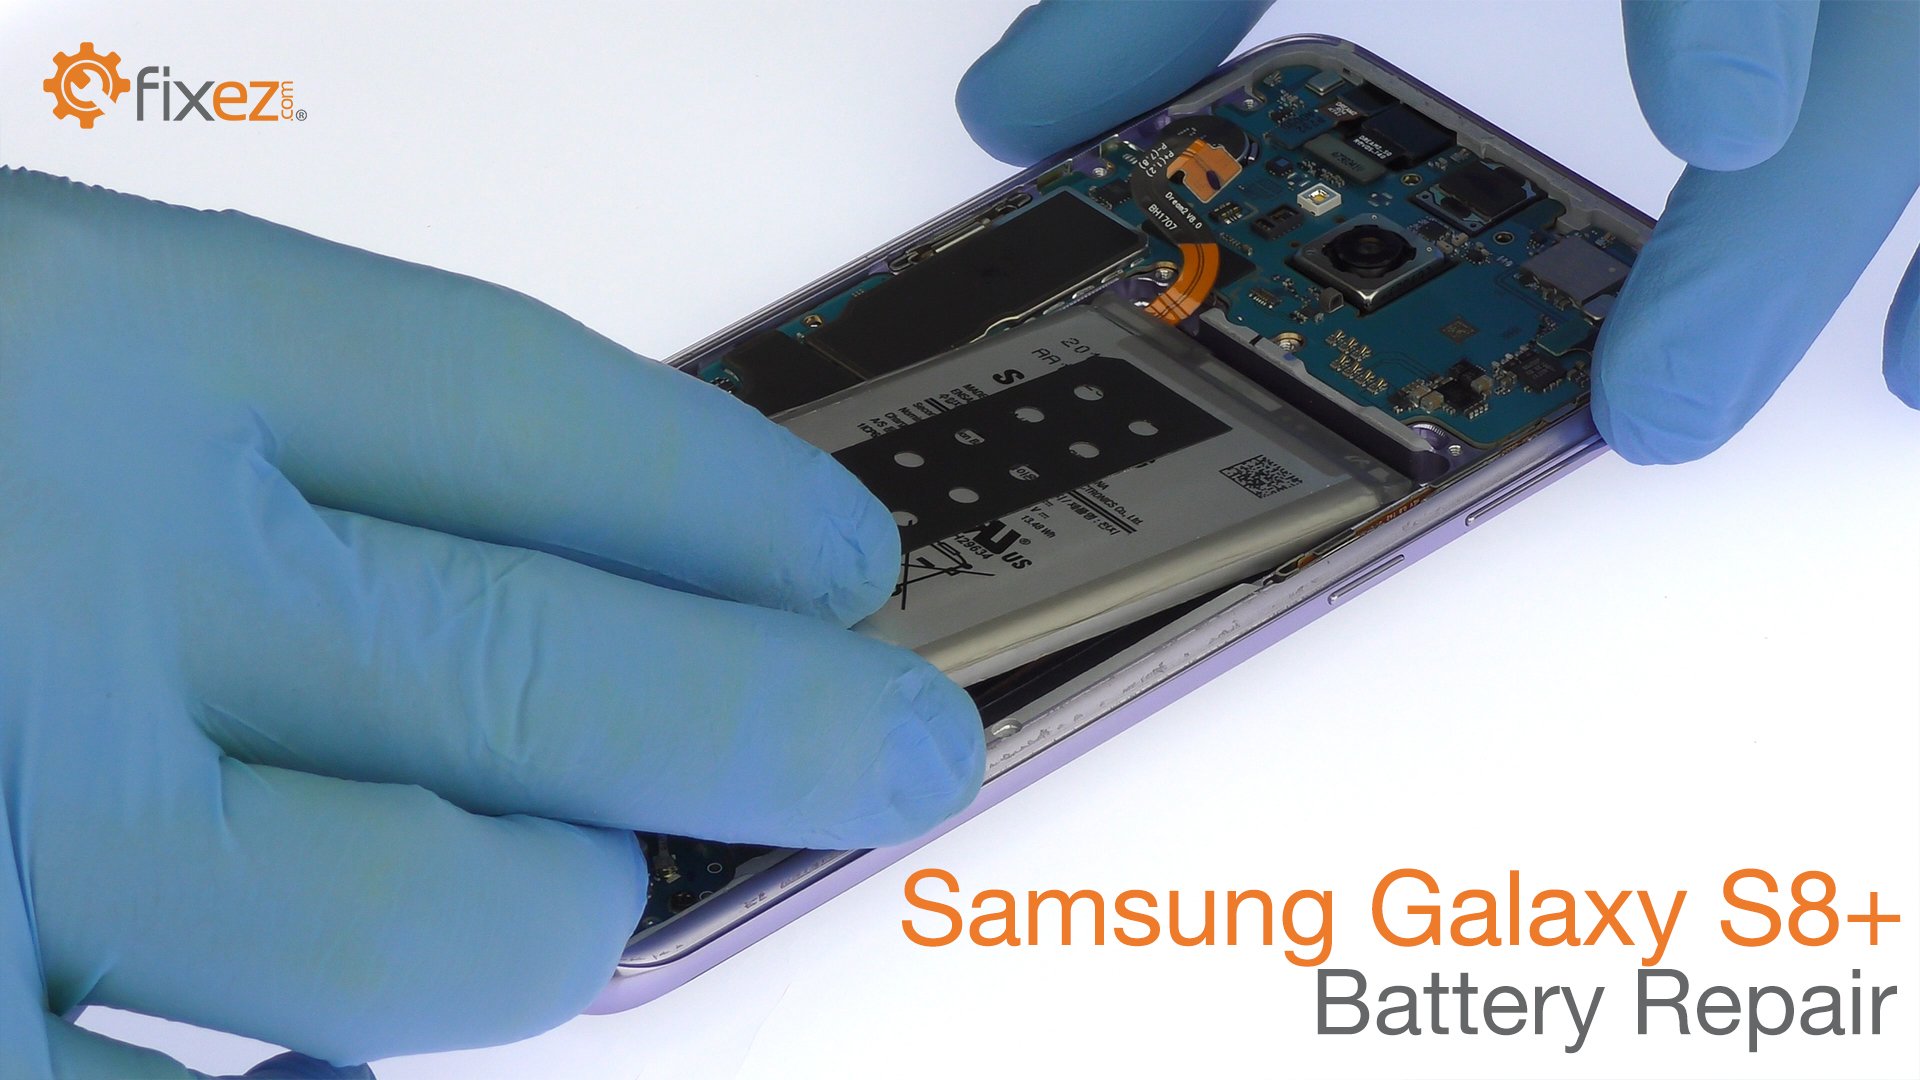 Samsung Galaxy S8+ Battery Repair